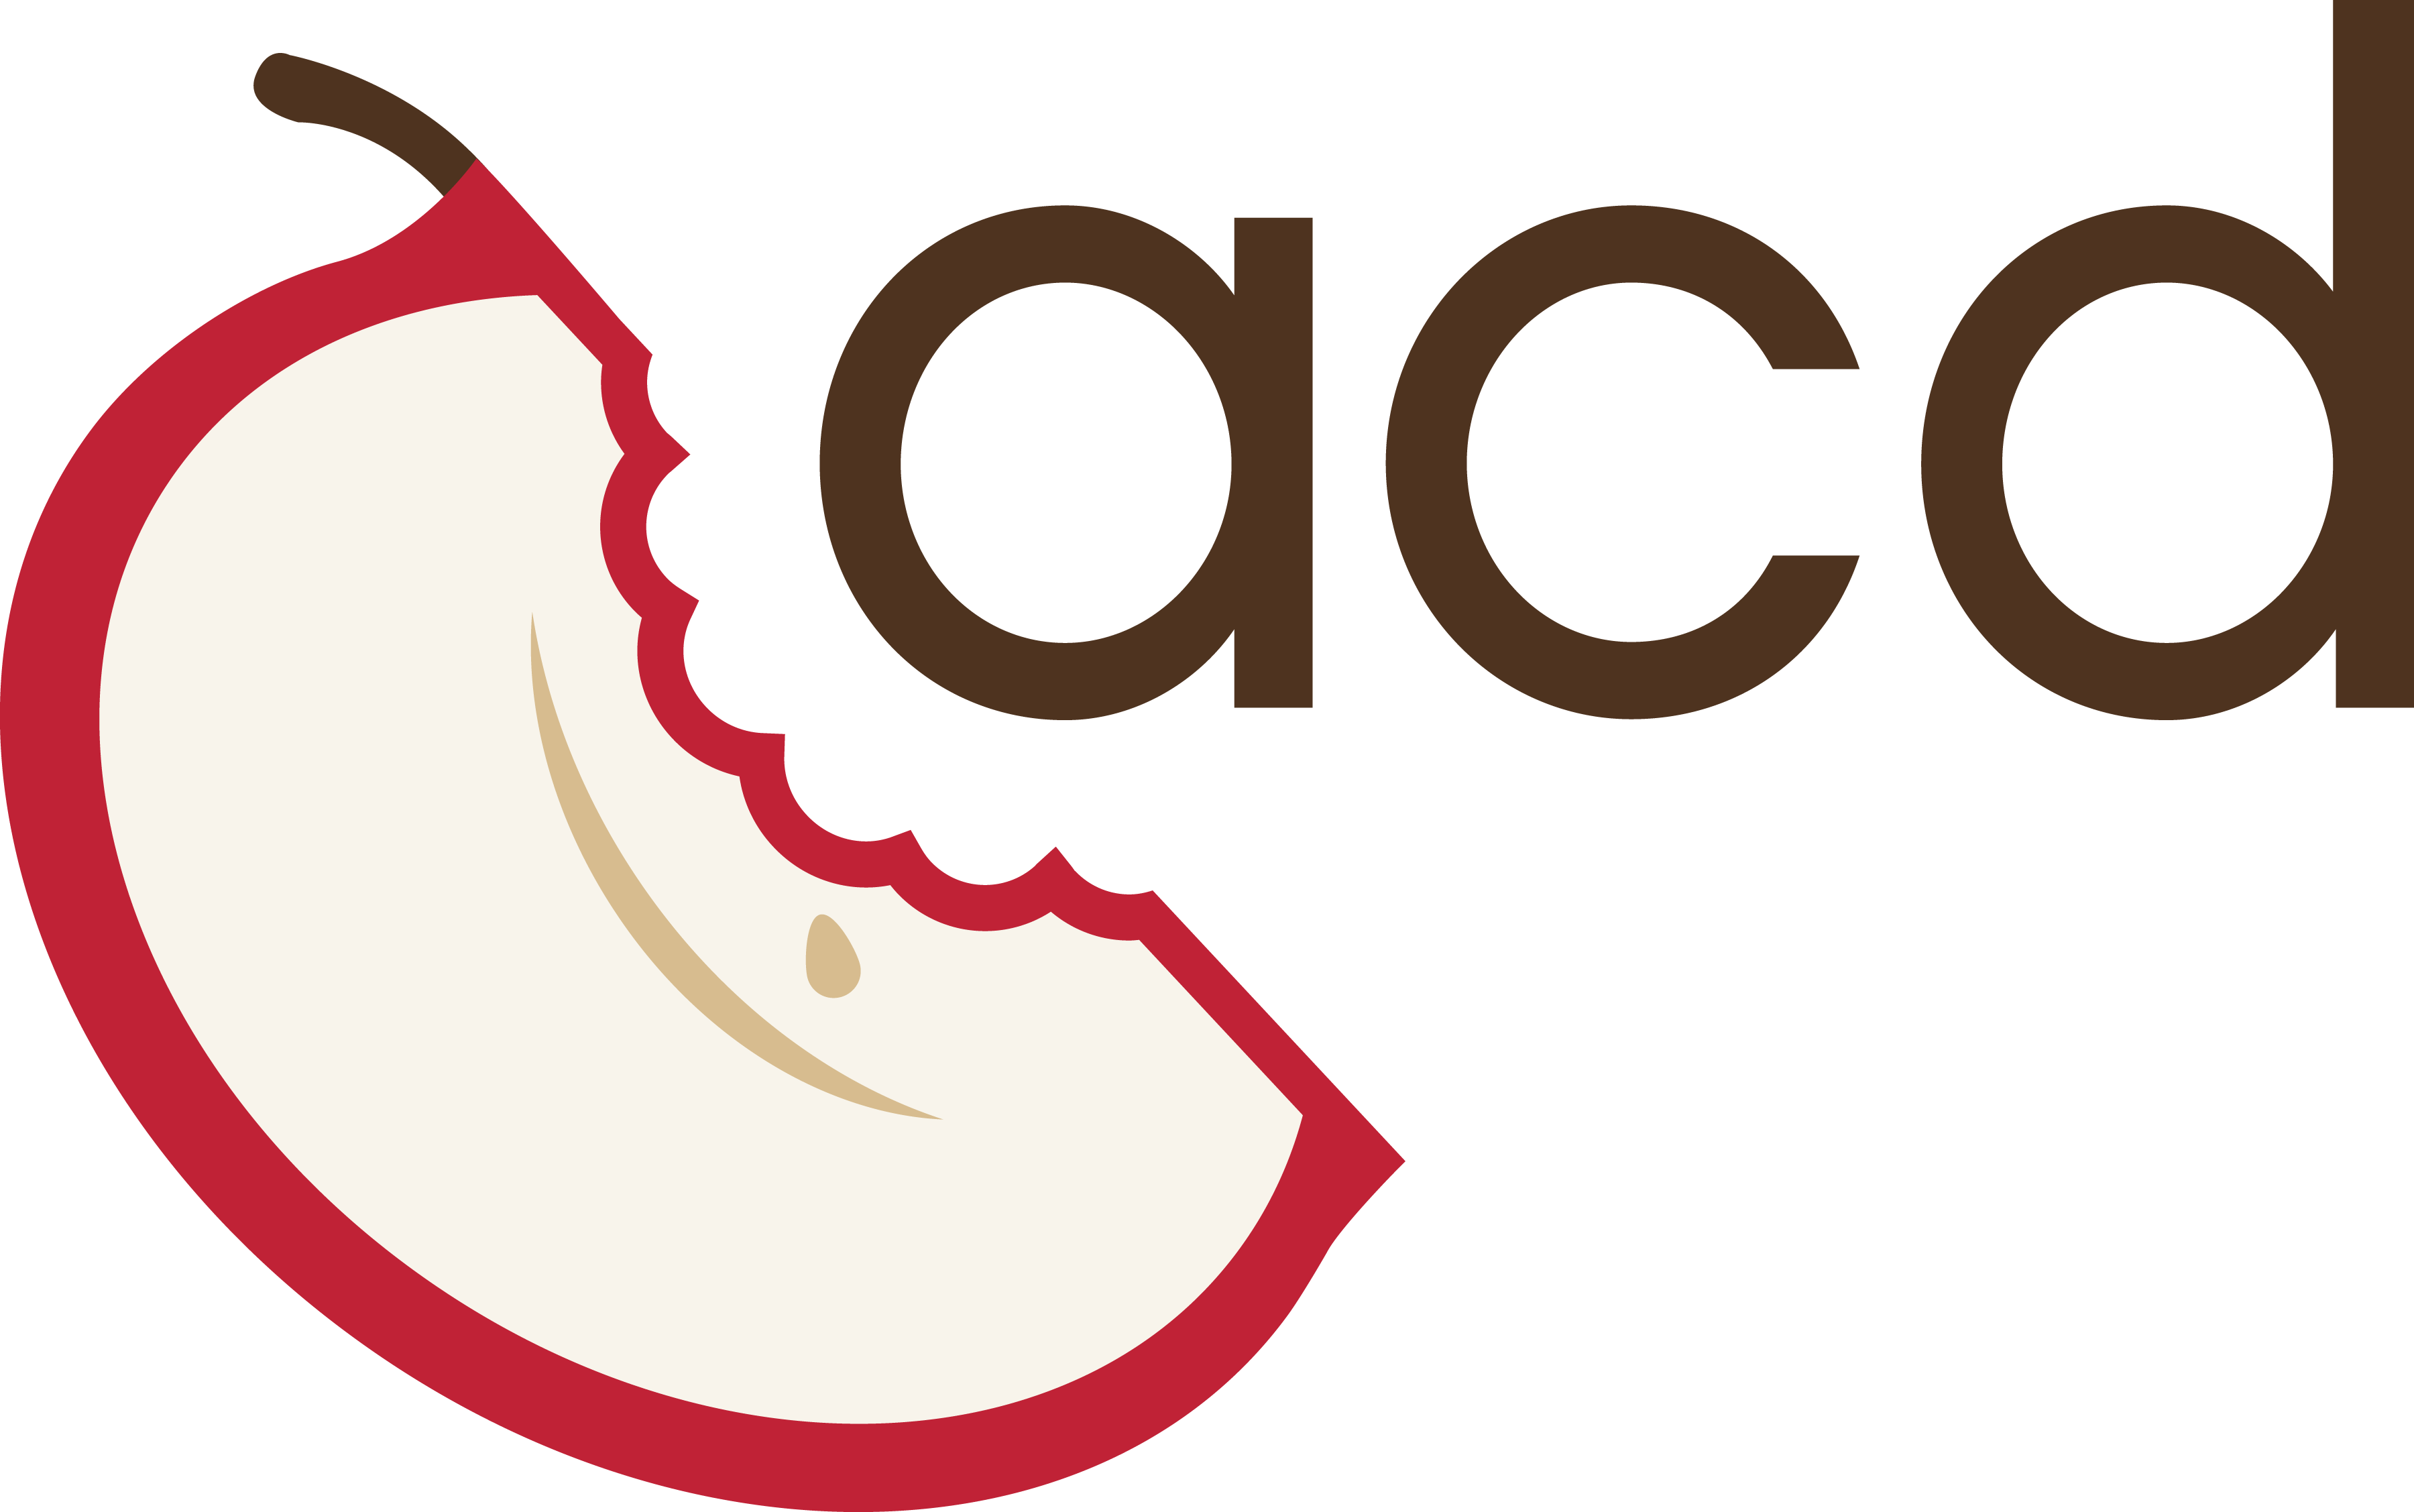 acd logo